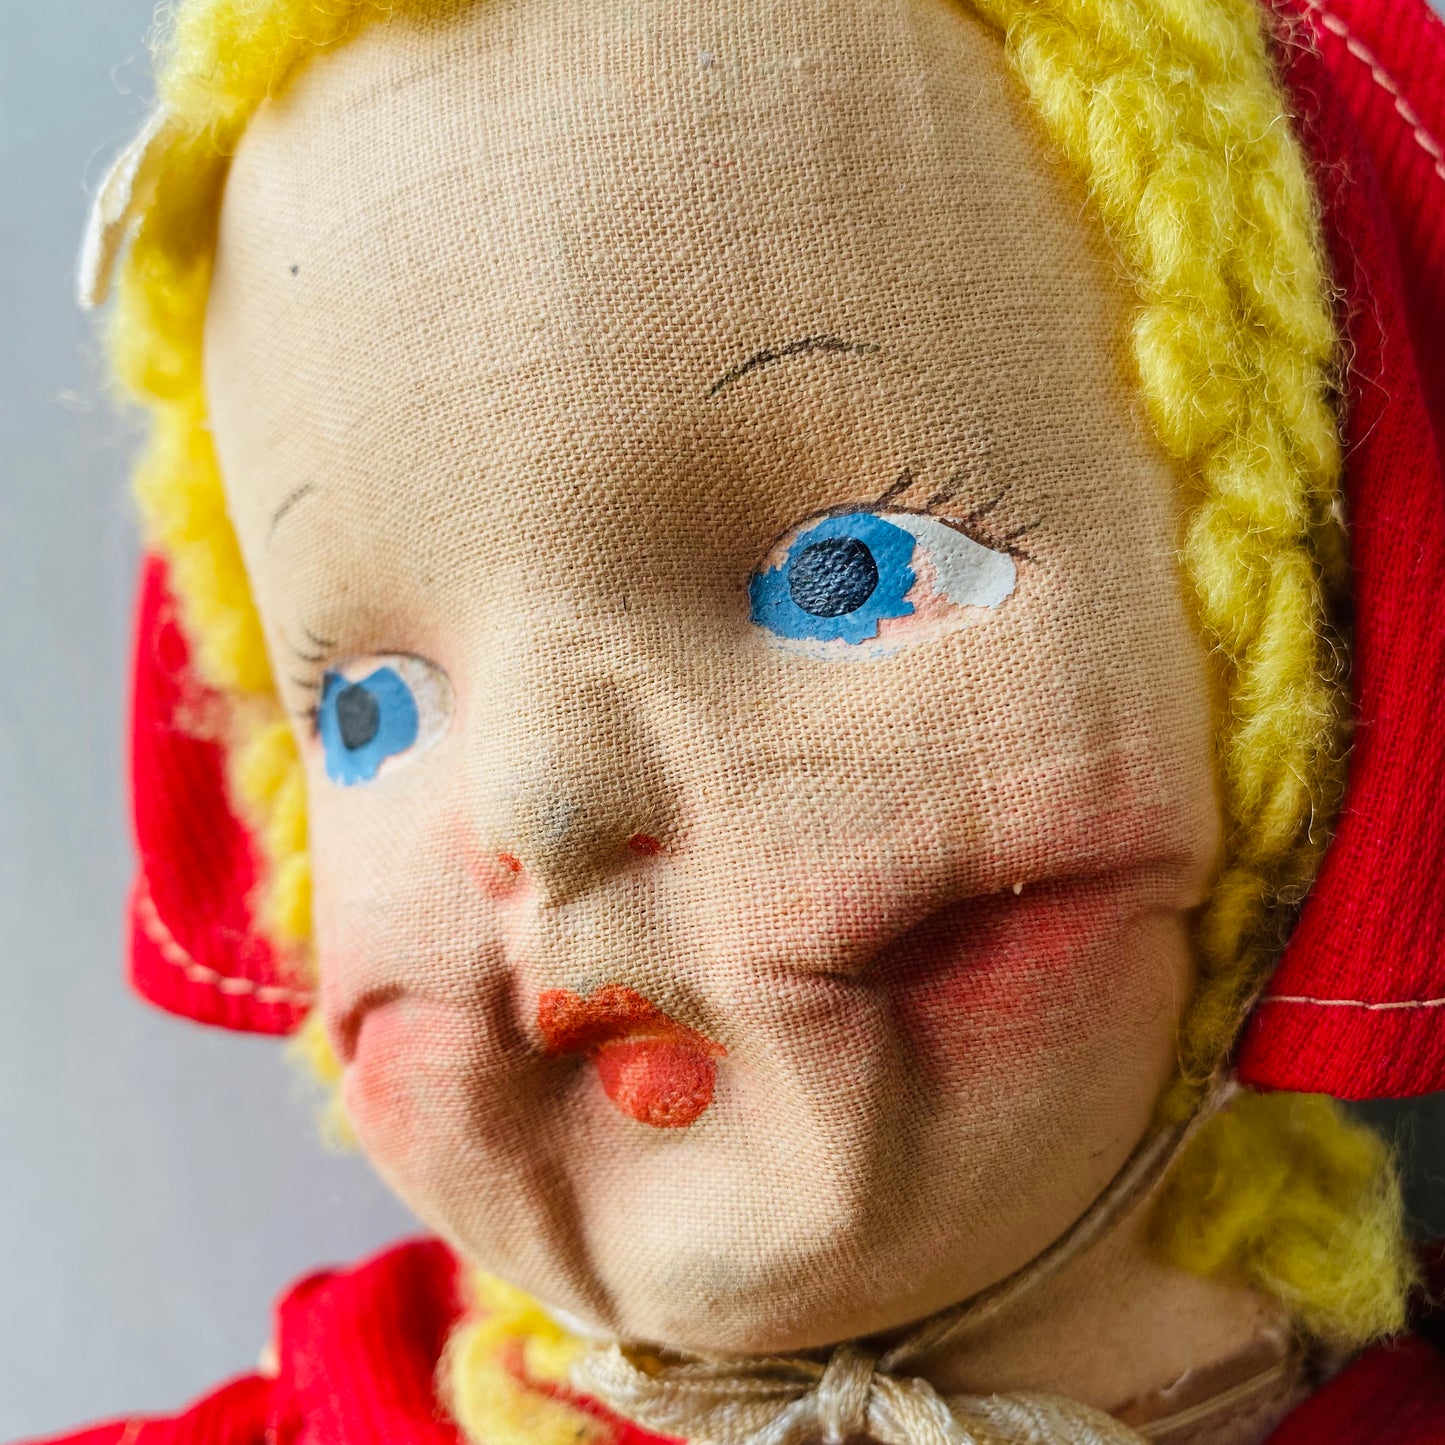 【1940s USA vintage】Little Red Riding Hood vintage doll